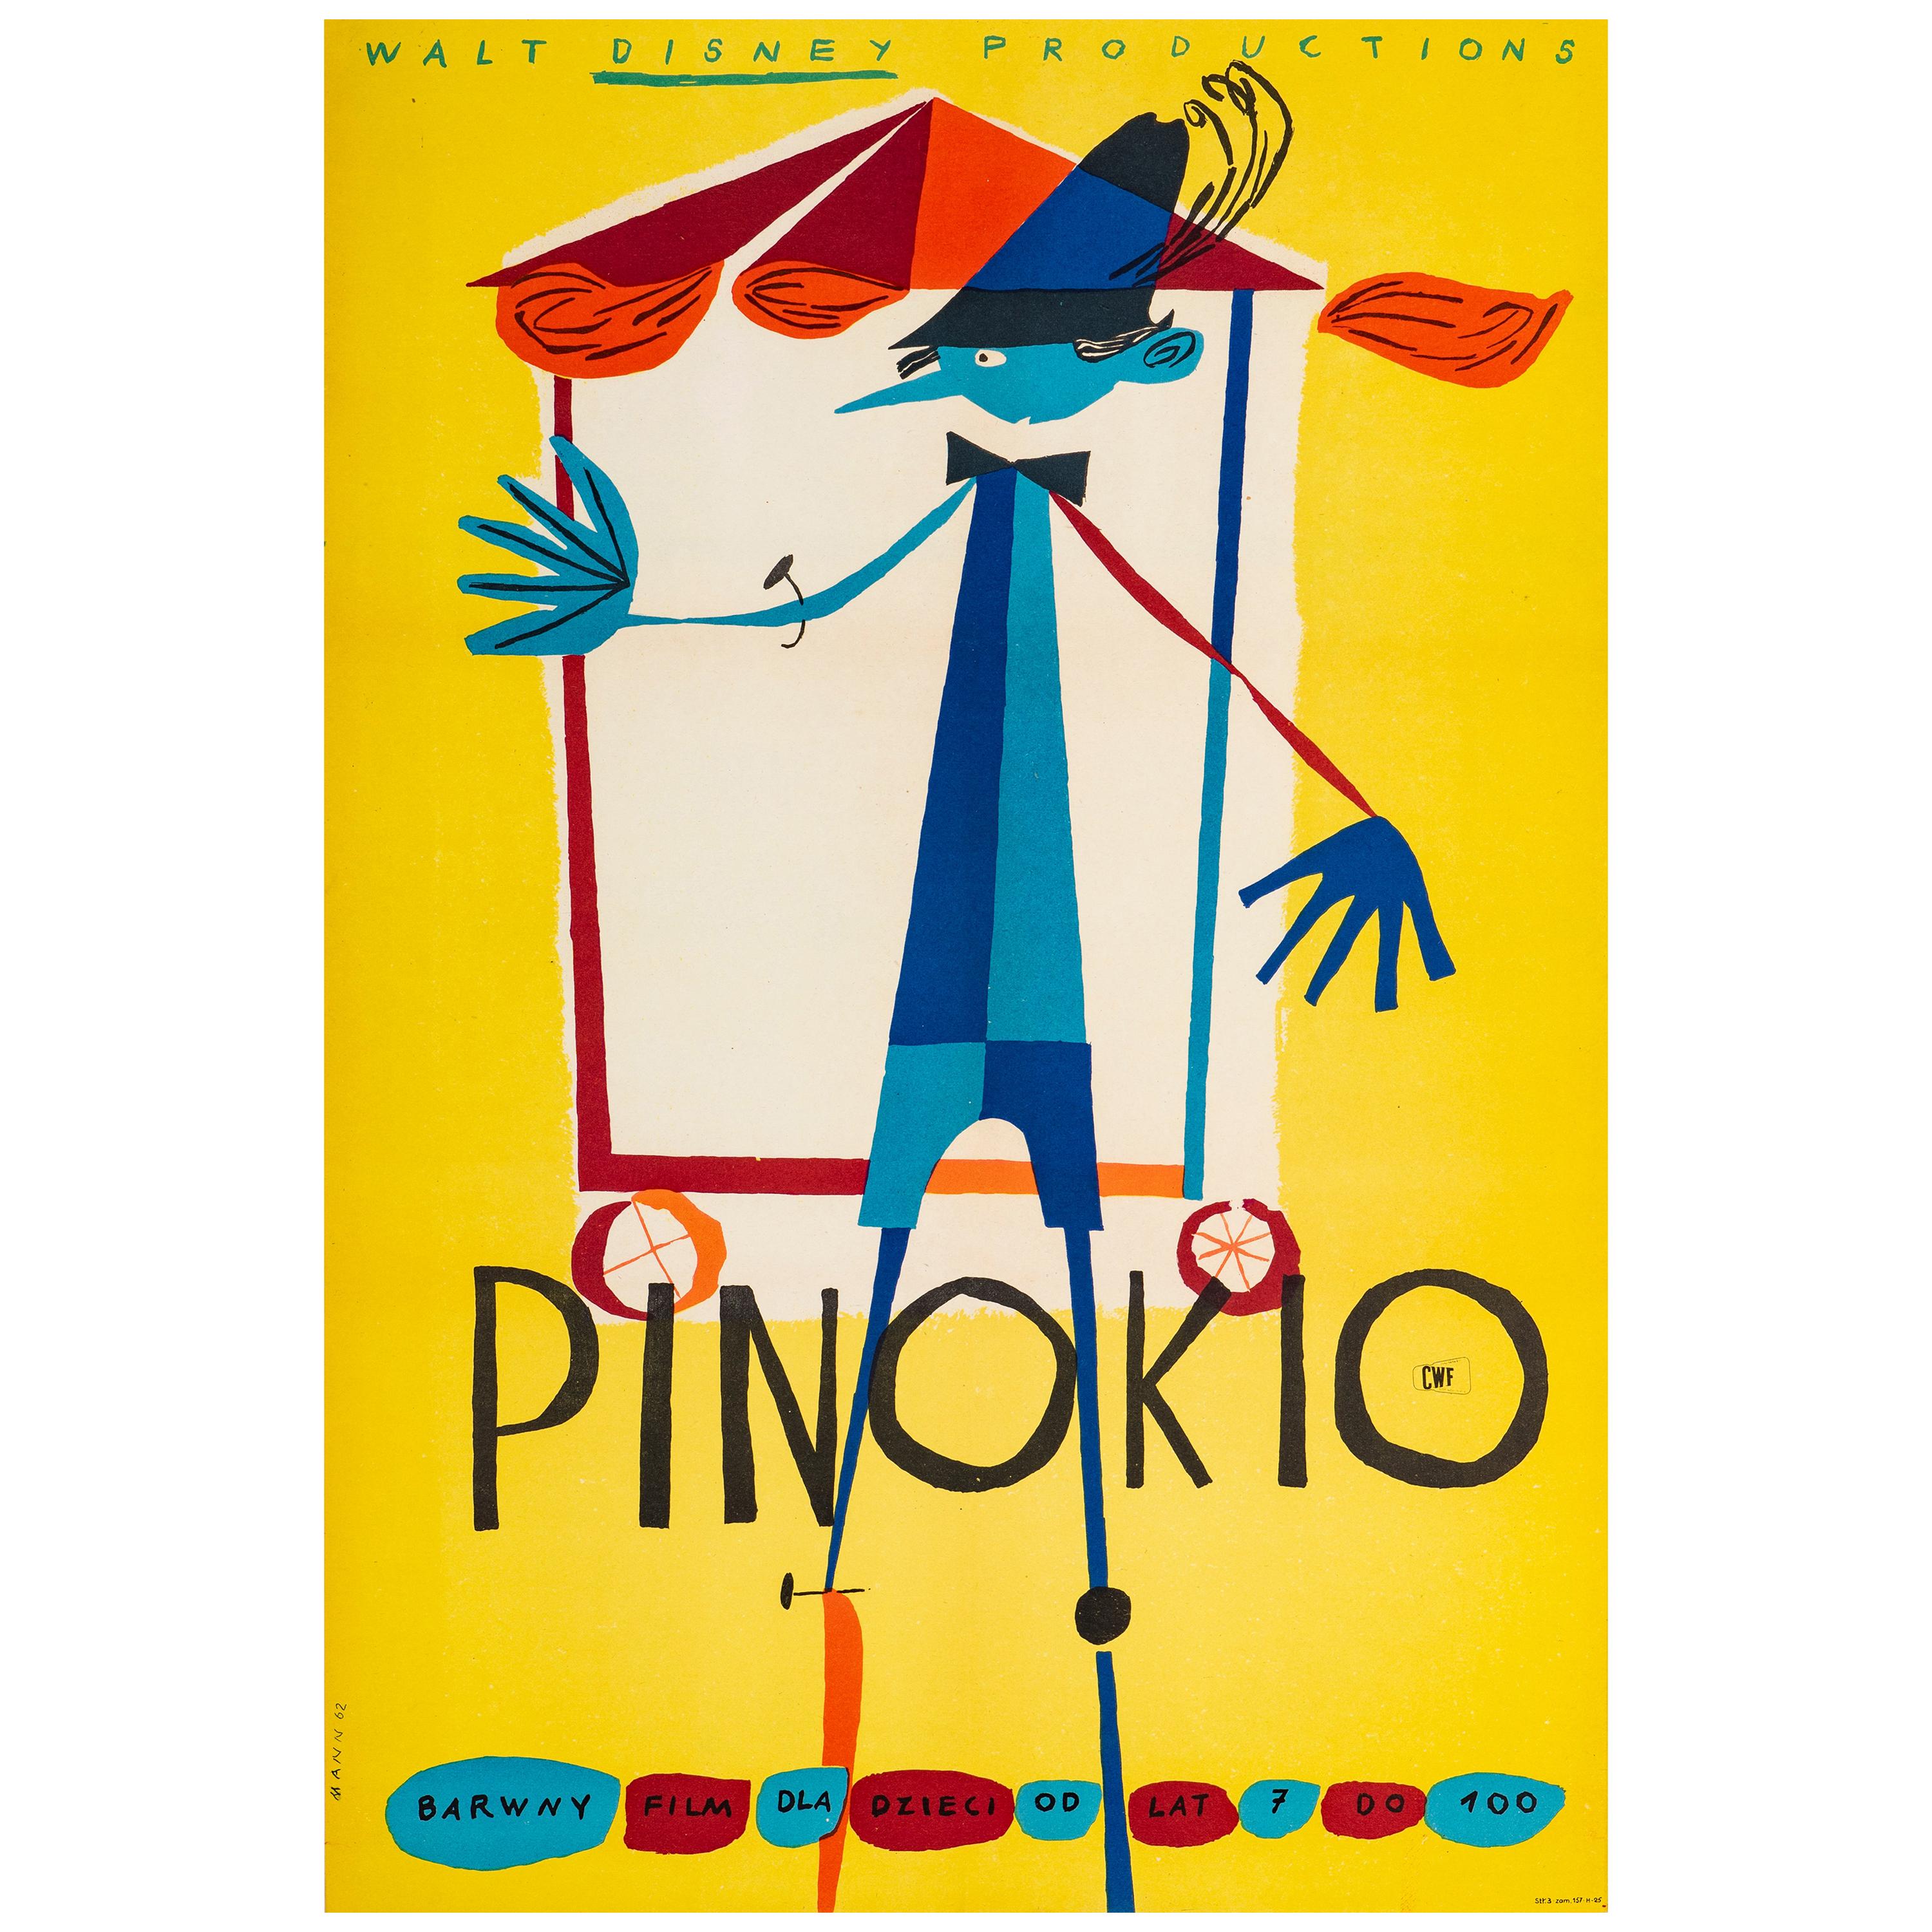 'Pinocchio' Original Vintage Polish Film Poster by Kazimierz Mann, 1962